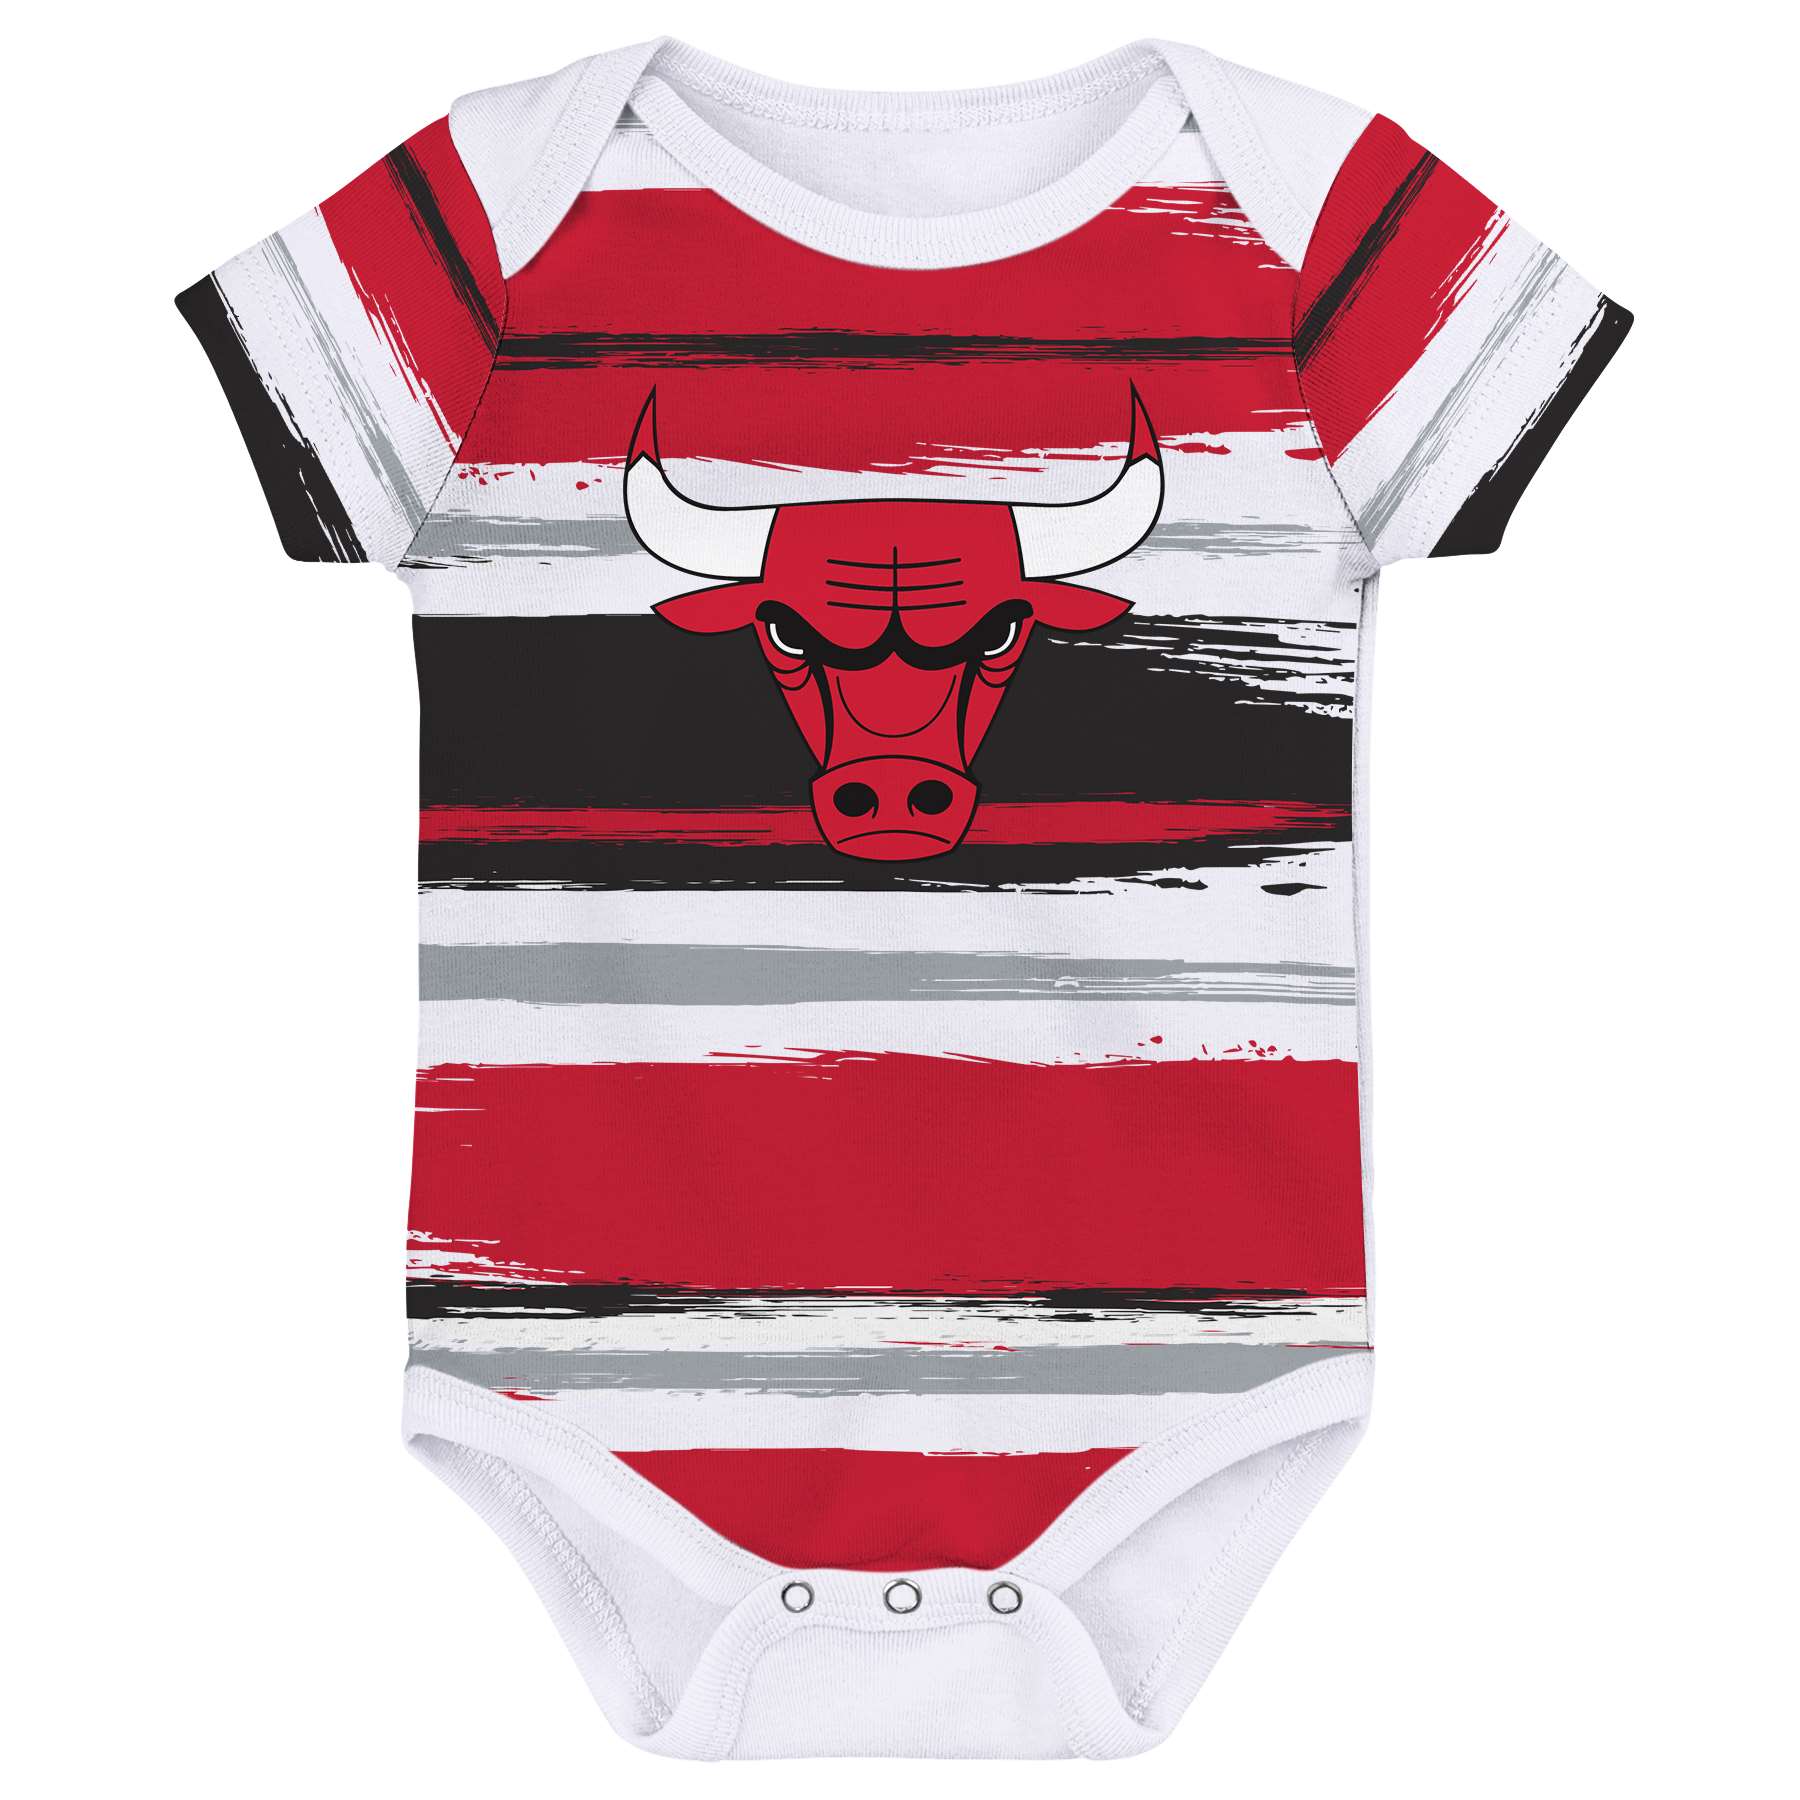 Chicago Bulls NBA Team Favorites SS Creeper Red Bodysuit Infant Outerstuff